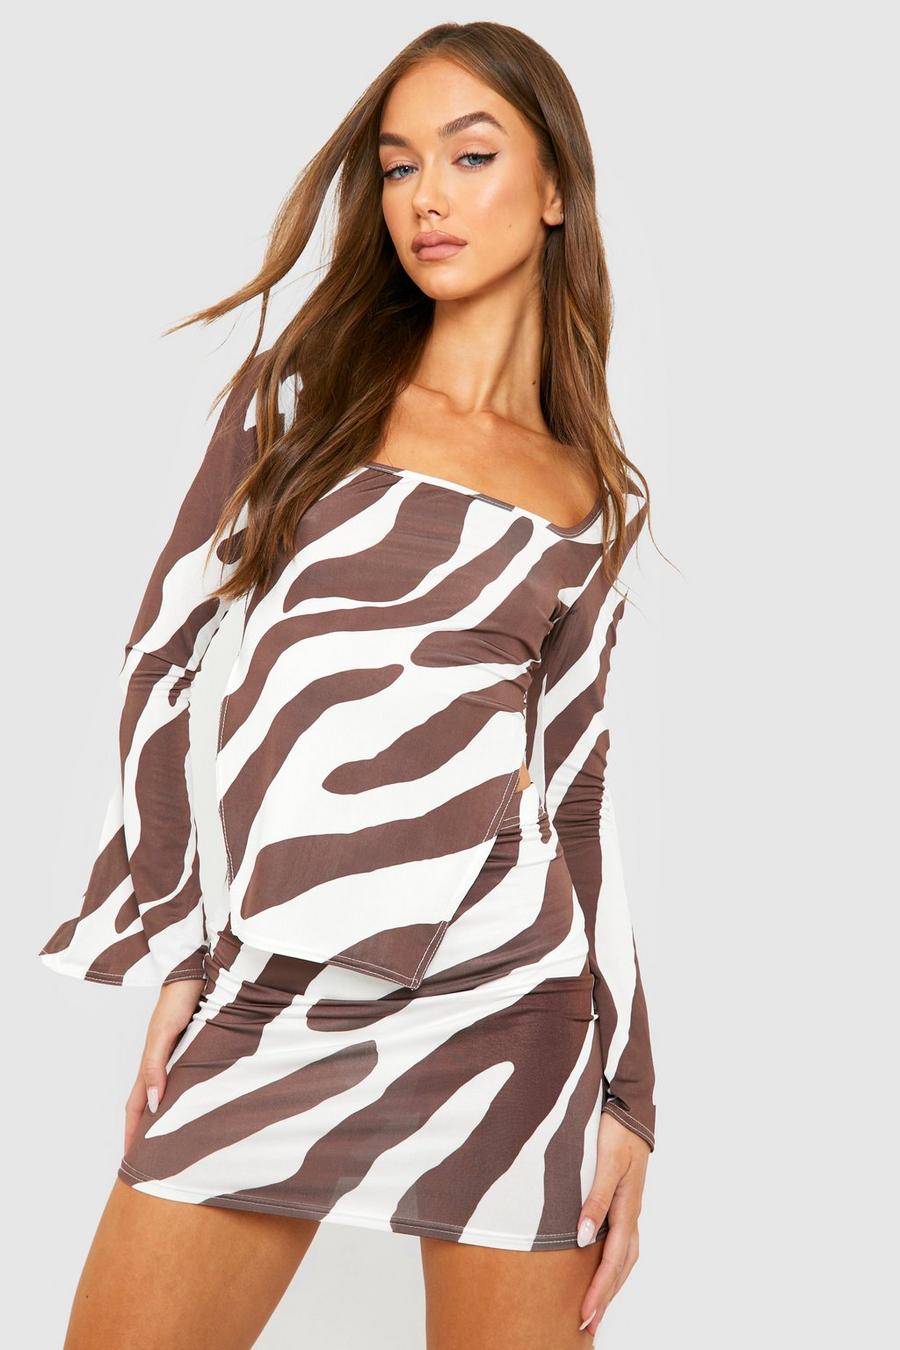 Chocolate marrón Zebra Print Puff Sleeve Top